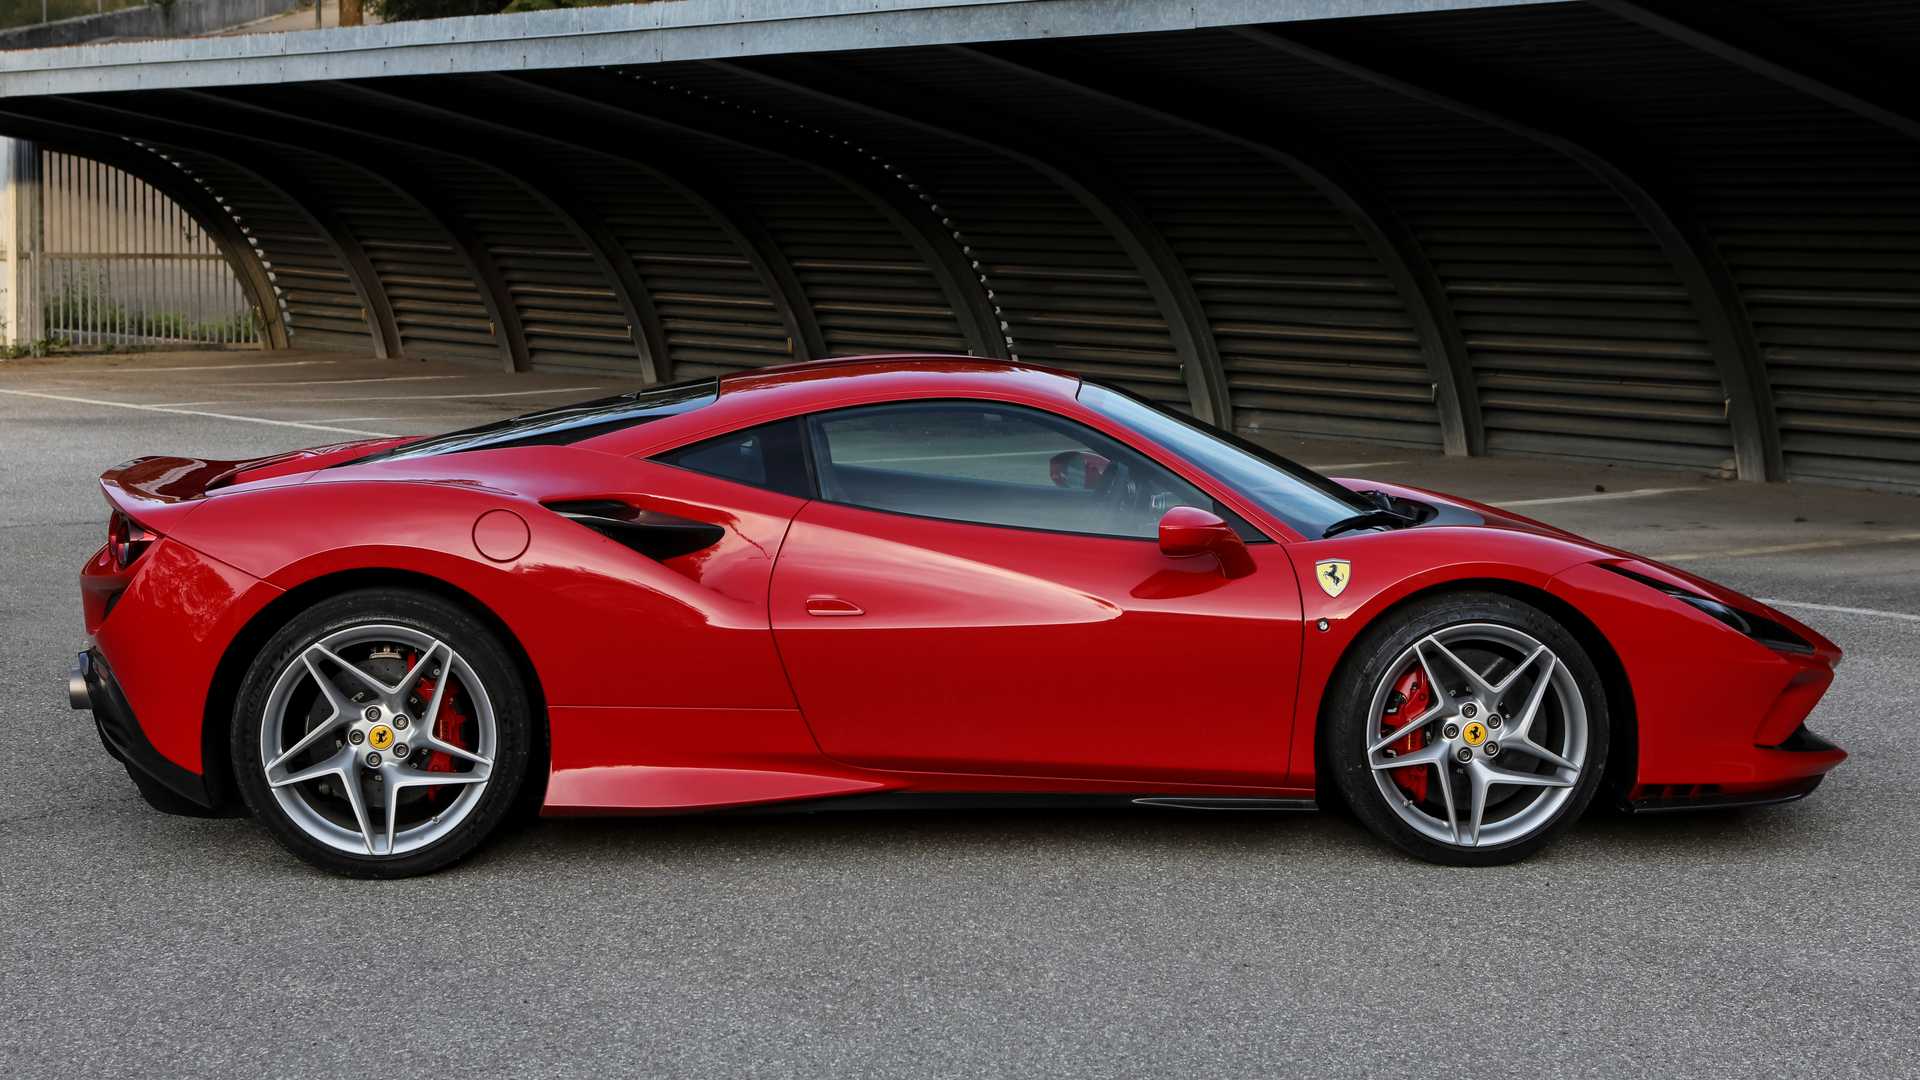 Ferrari Making $111,000 Profit On Every Car It Sells